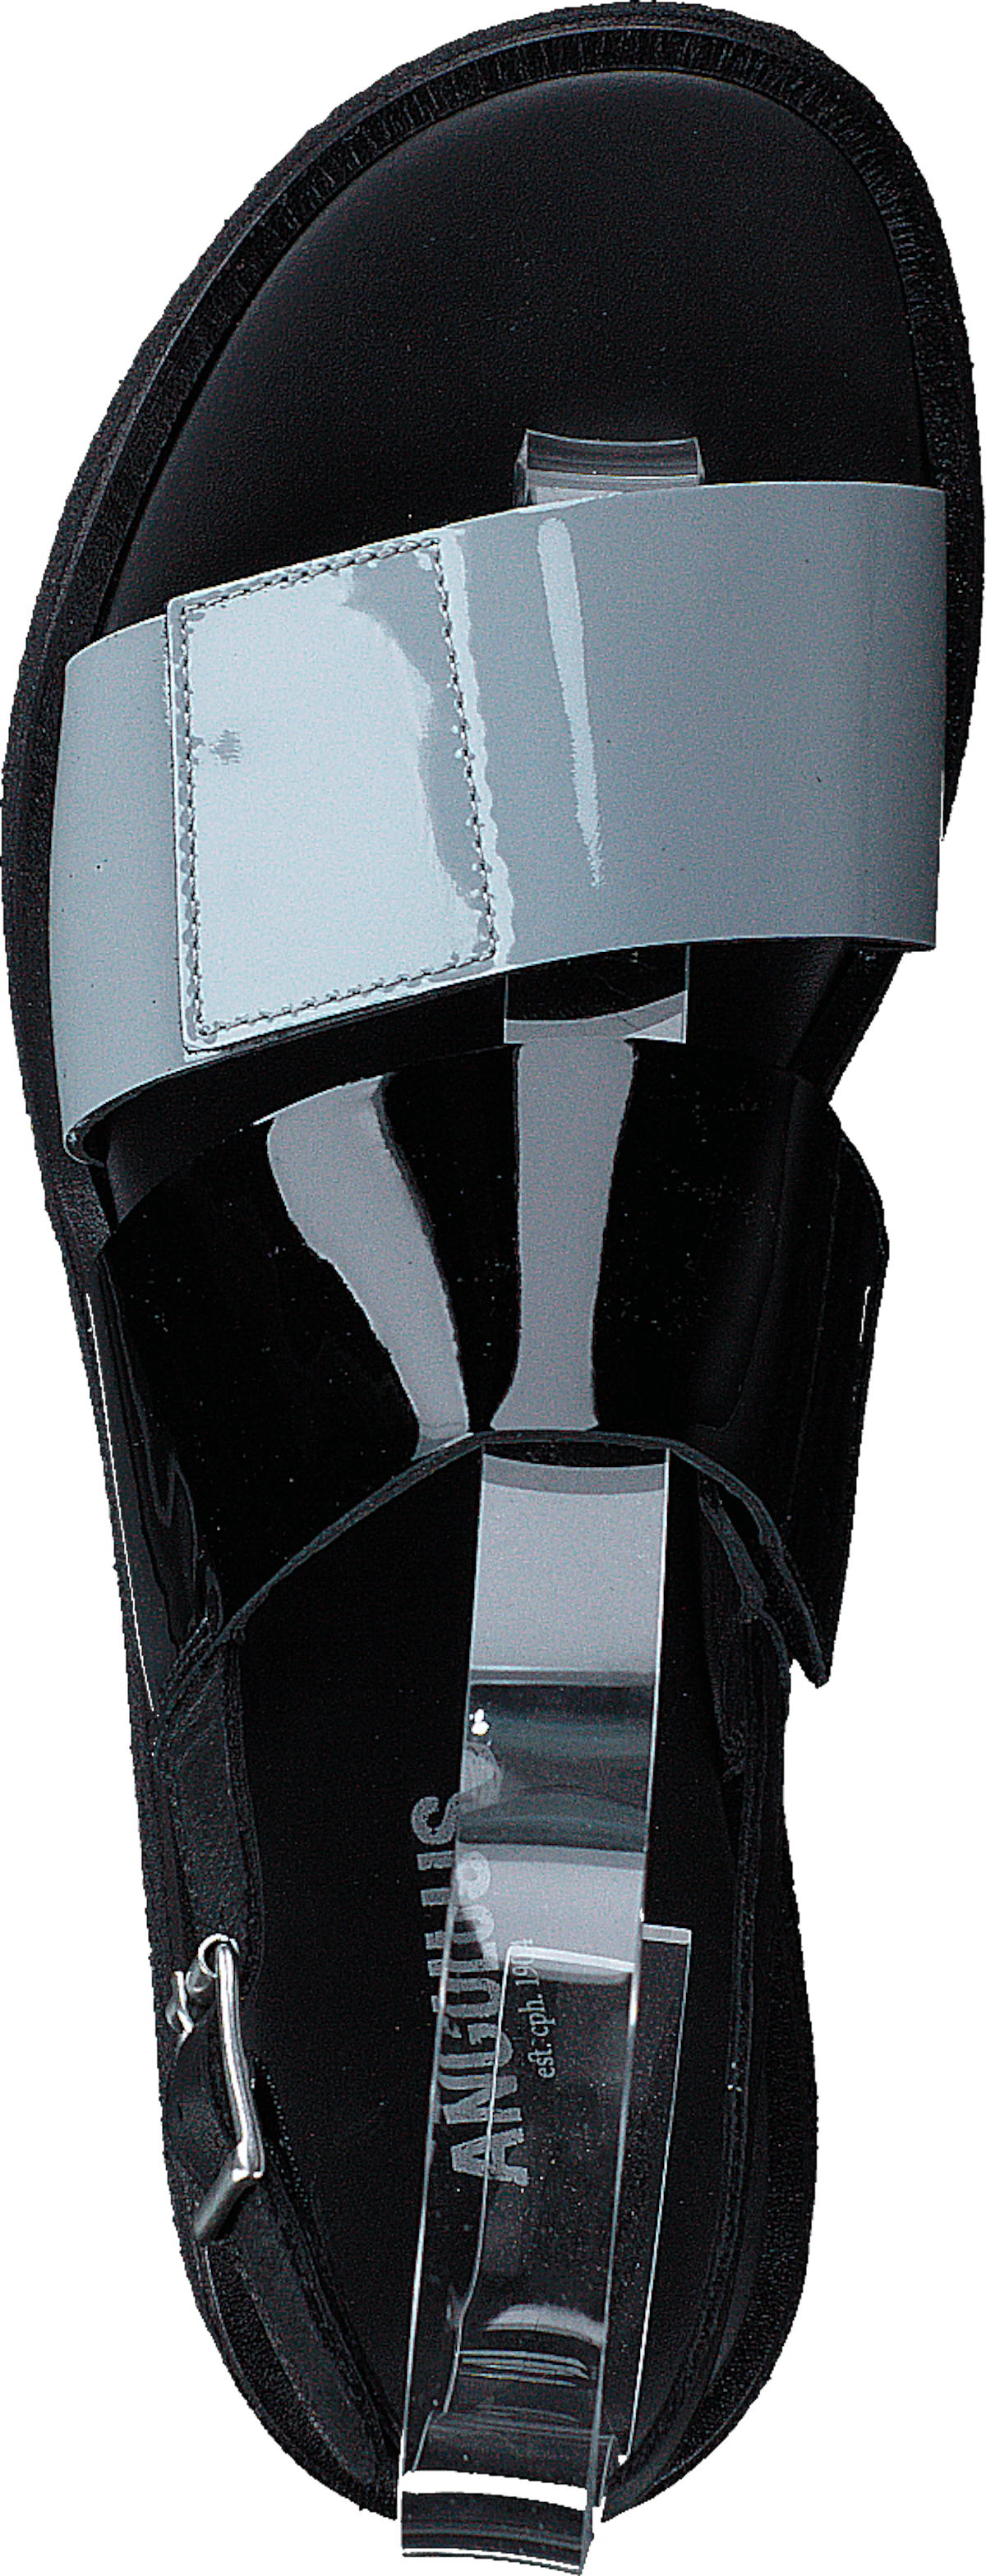 Sandal With Plateau Sole Greyblue/black/black